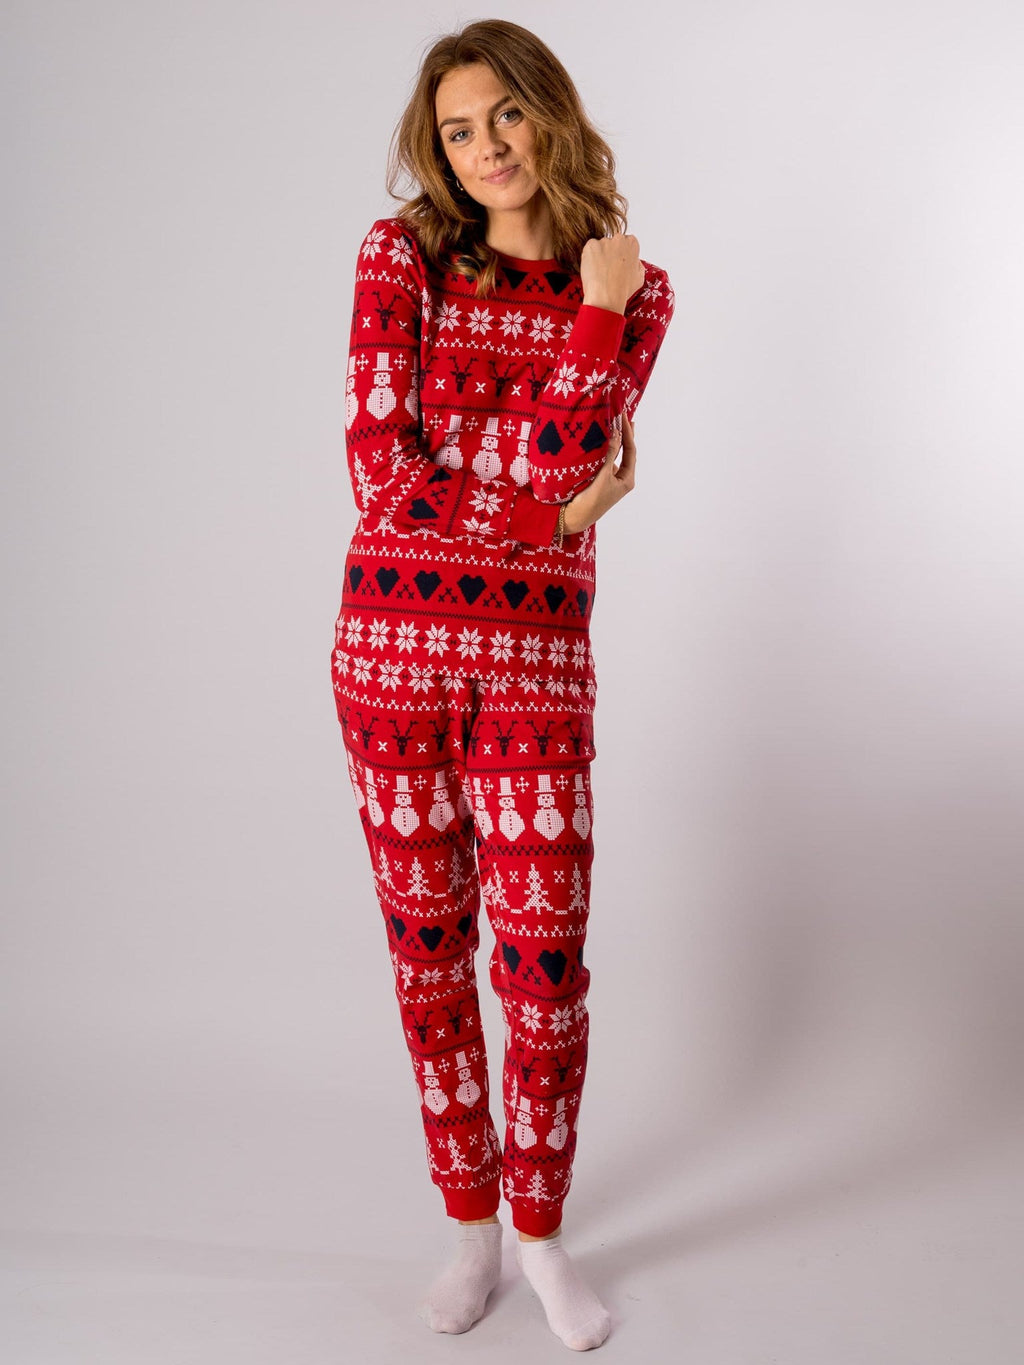 Snježna pahuljica pidžama - crvena